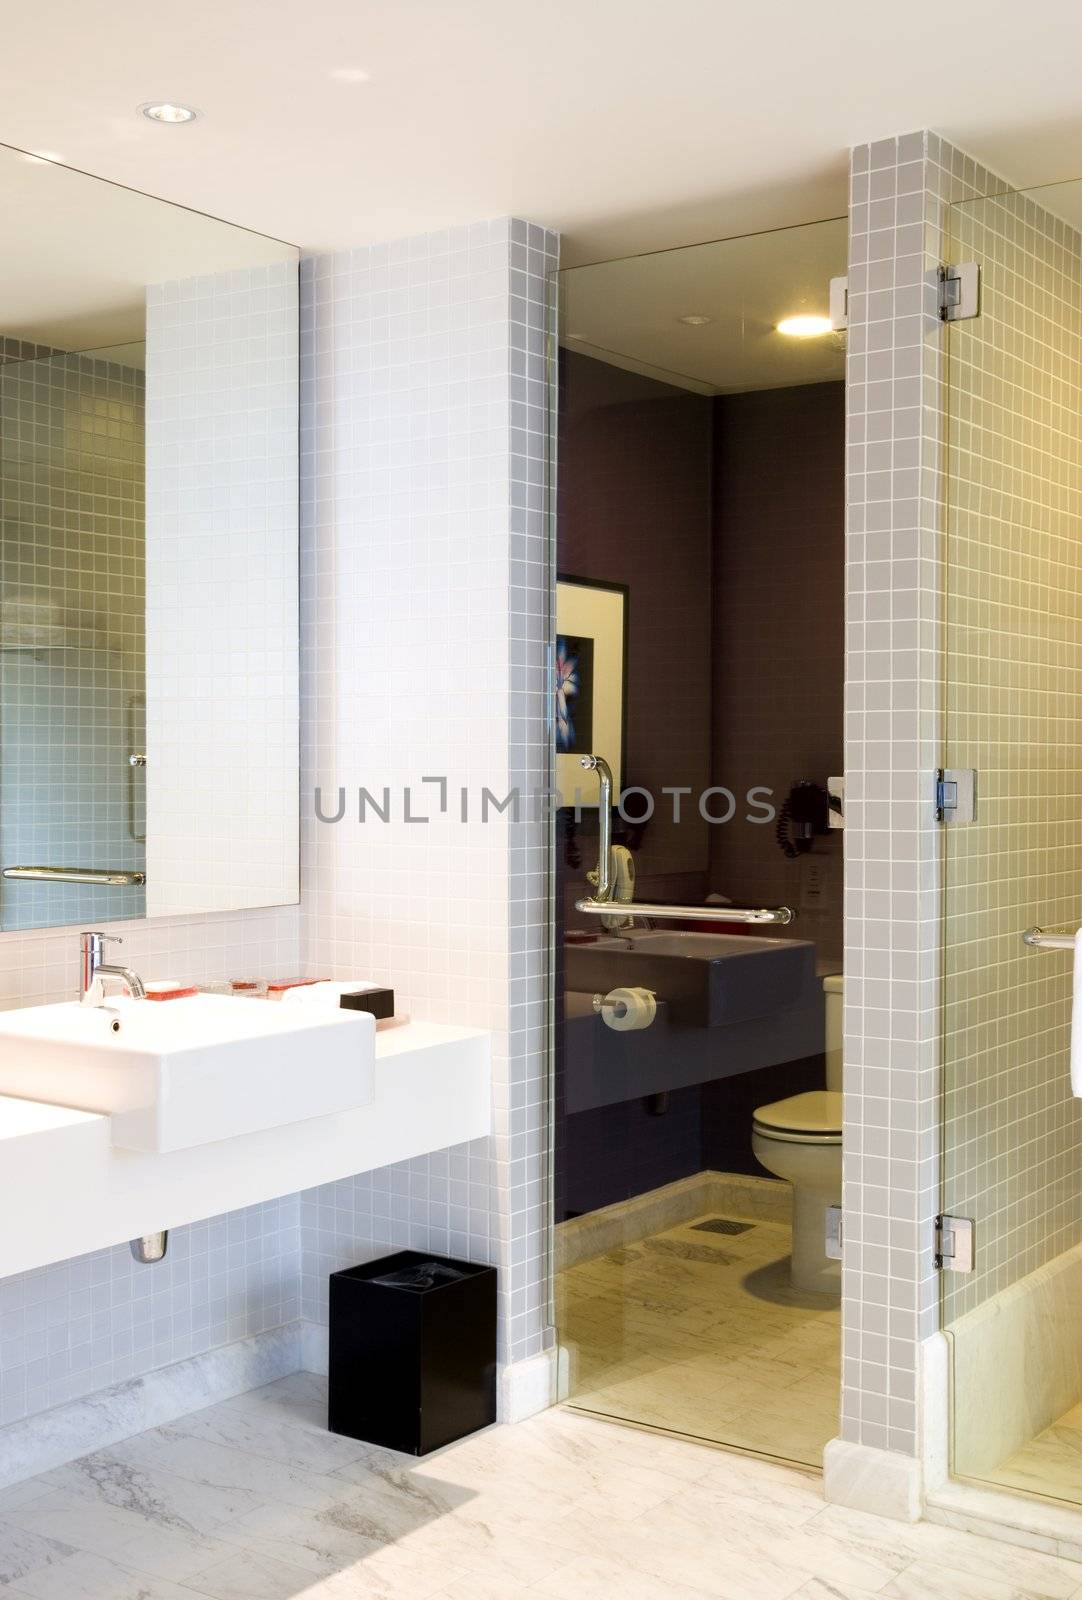 Image of a luxury hotel bathroom.